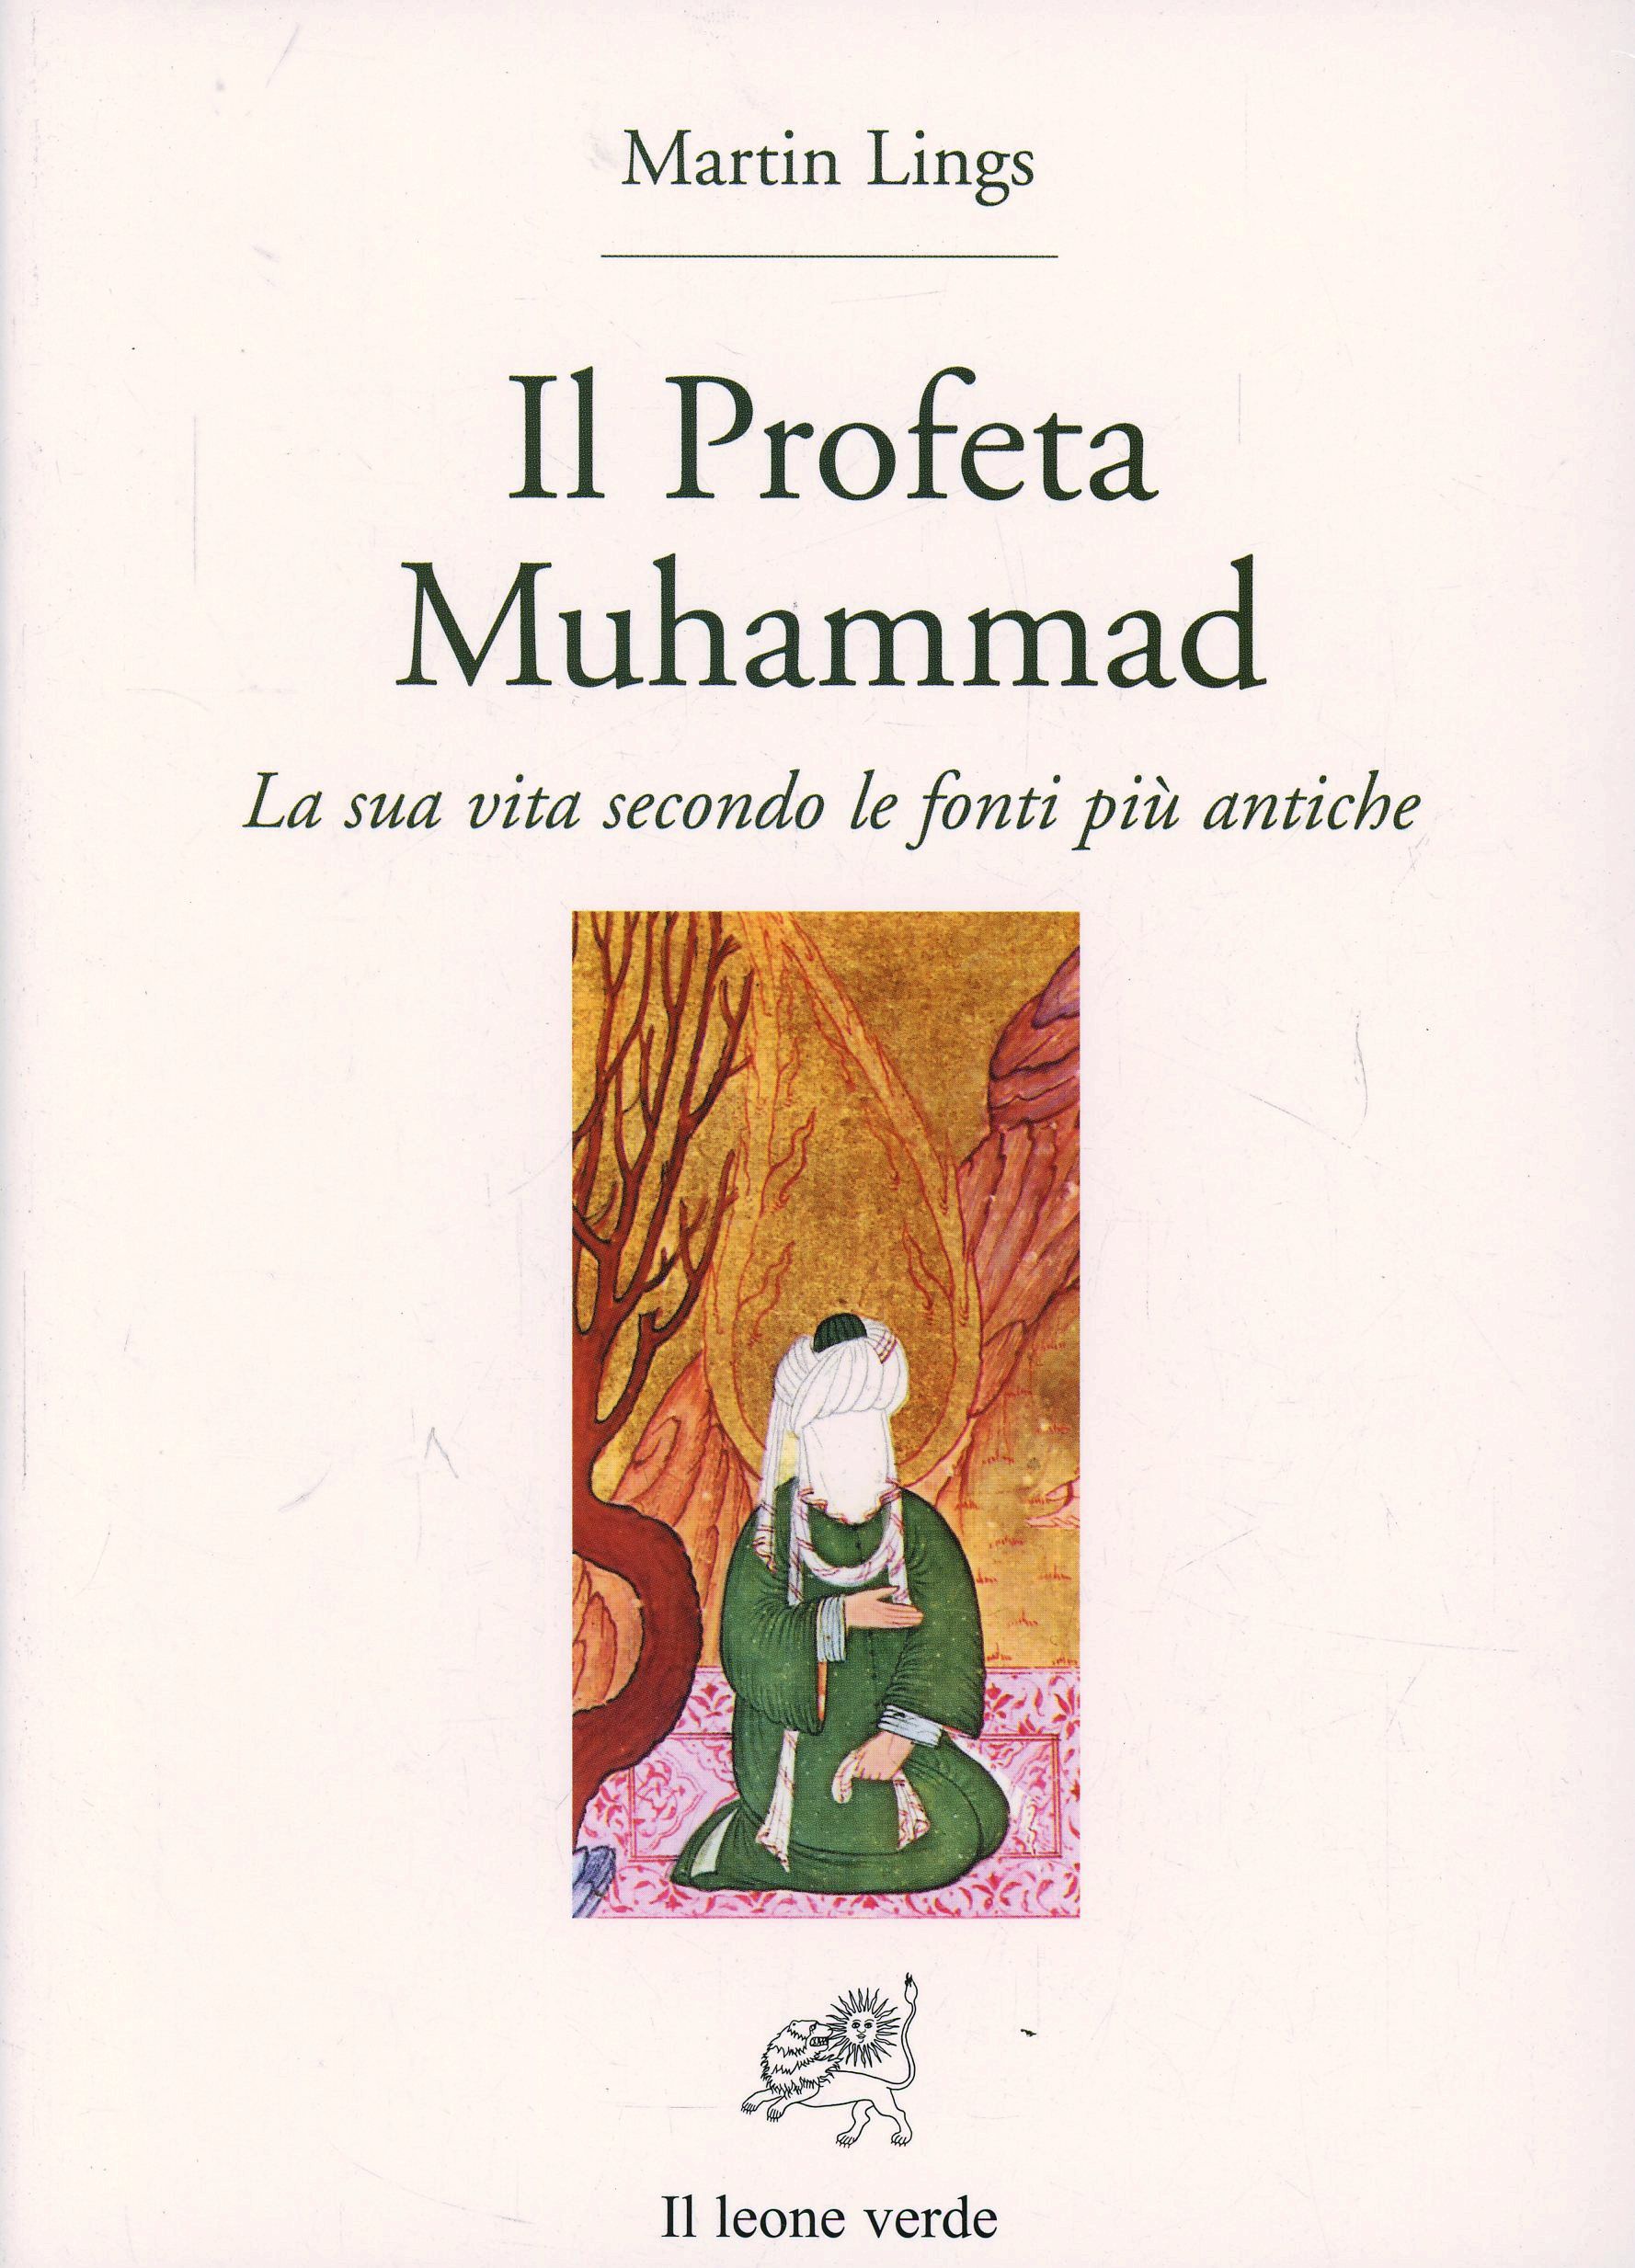 Il Profeta Muhammad_Martin Lings